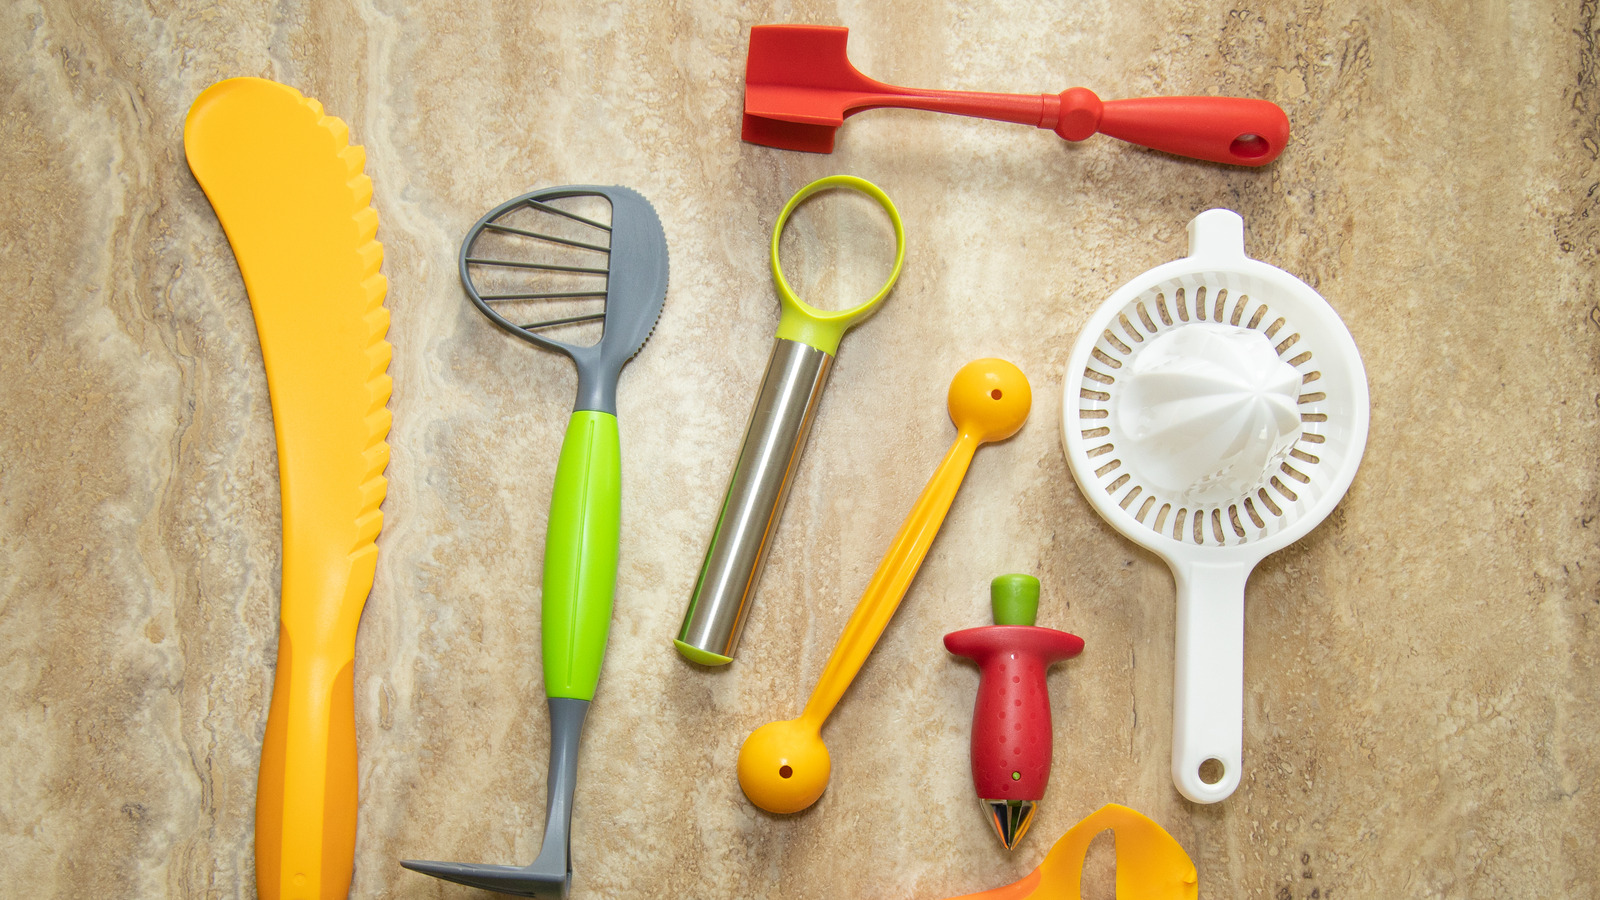 KitchenAid Tools and Gadgets, Set of 15